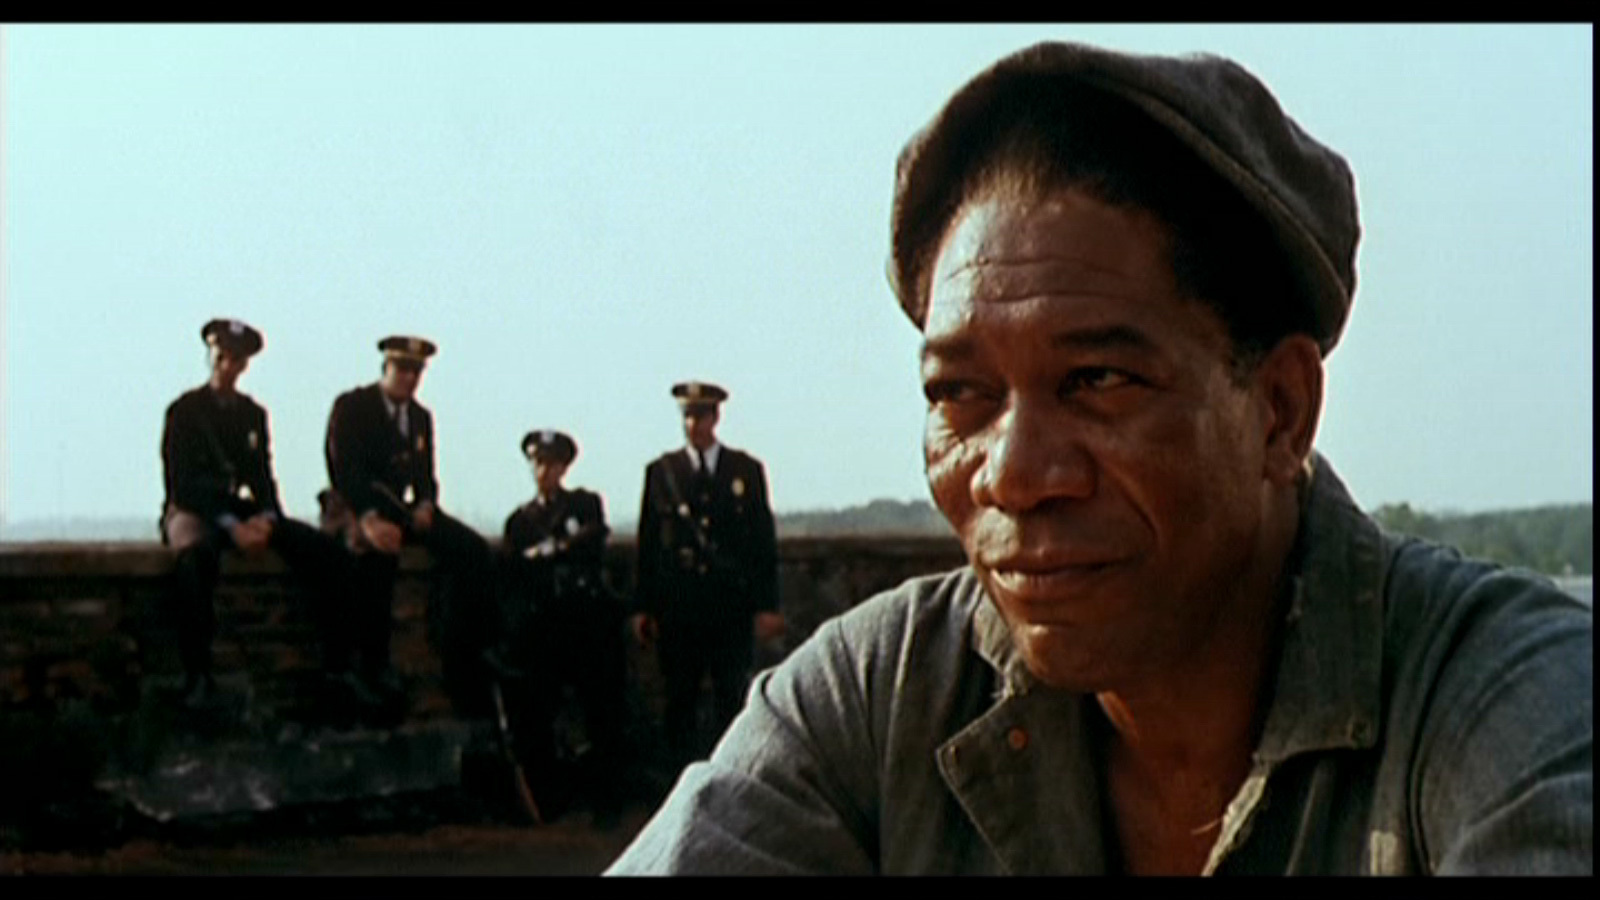 Morgan Freeman as Red in The Shawshank Redemption